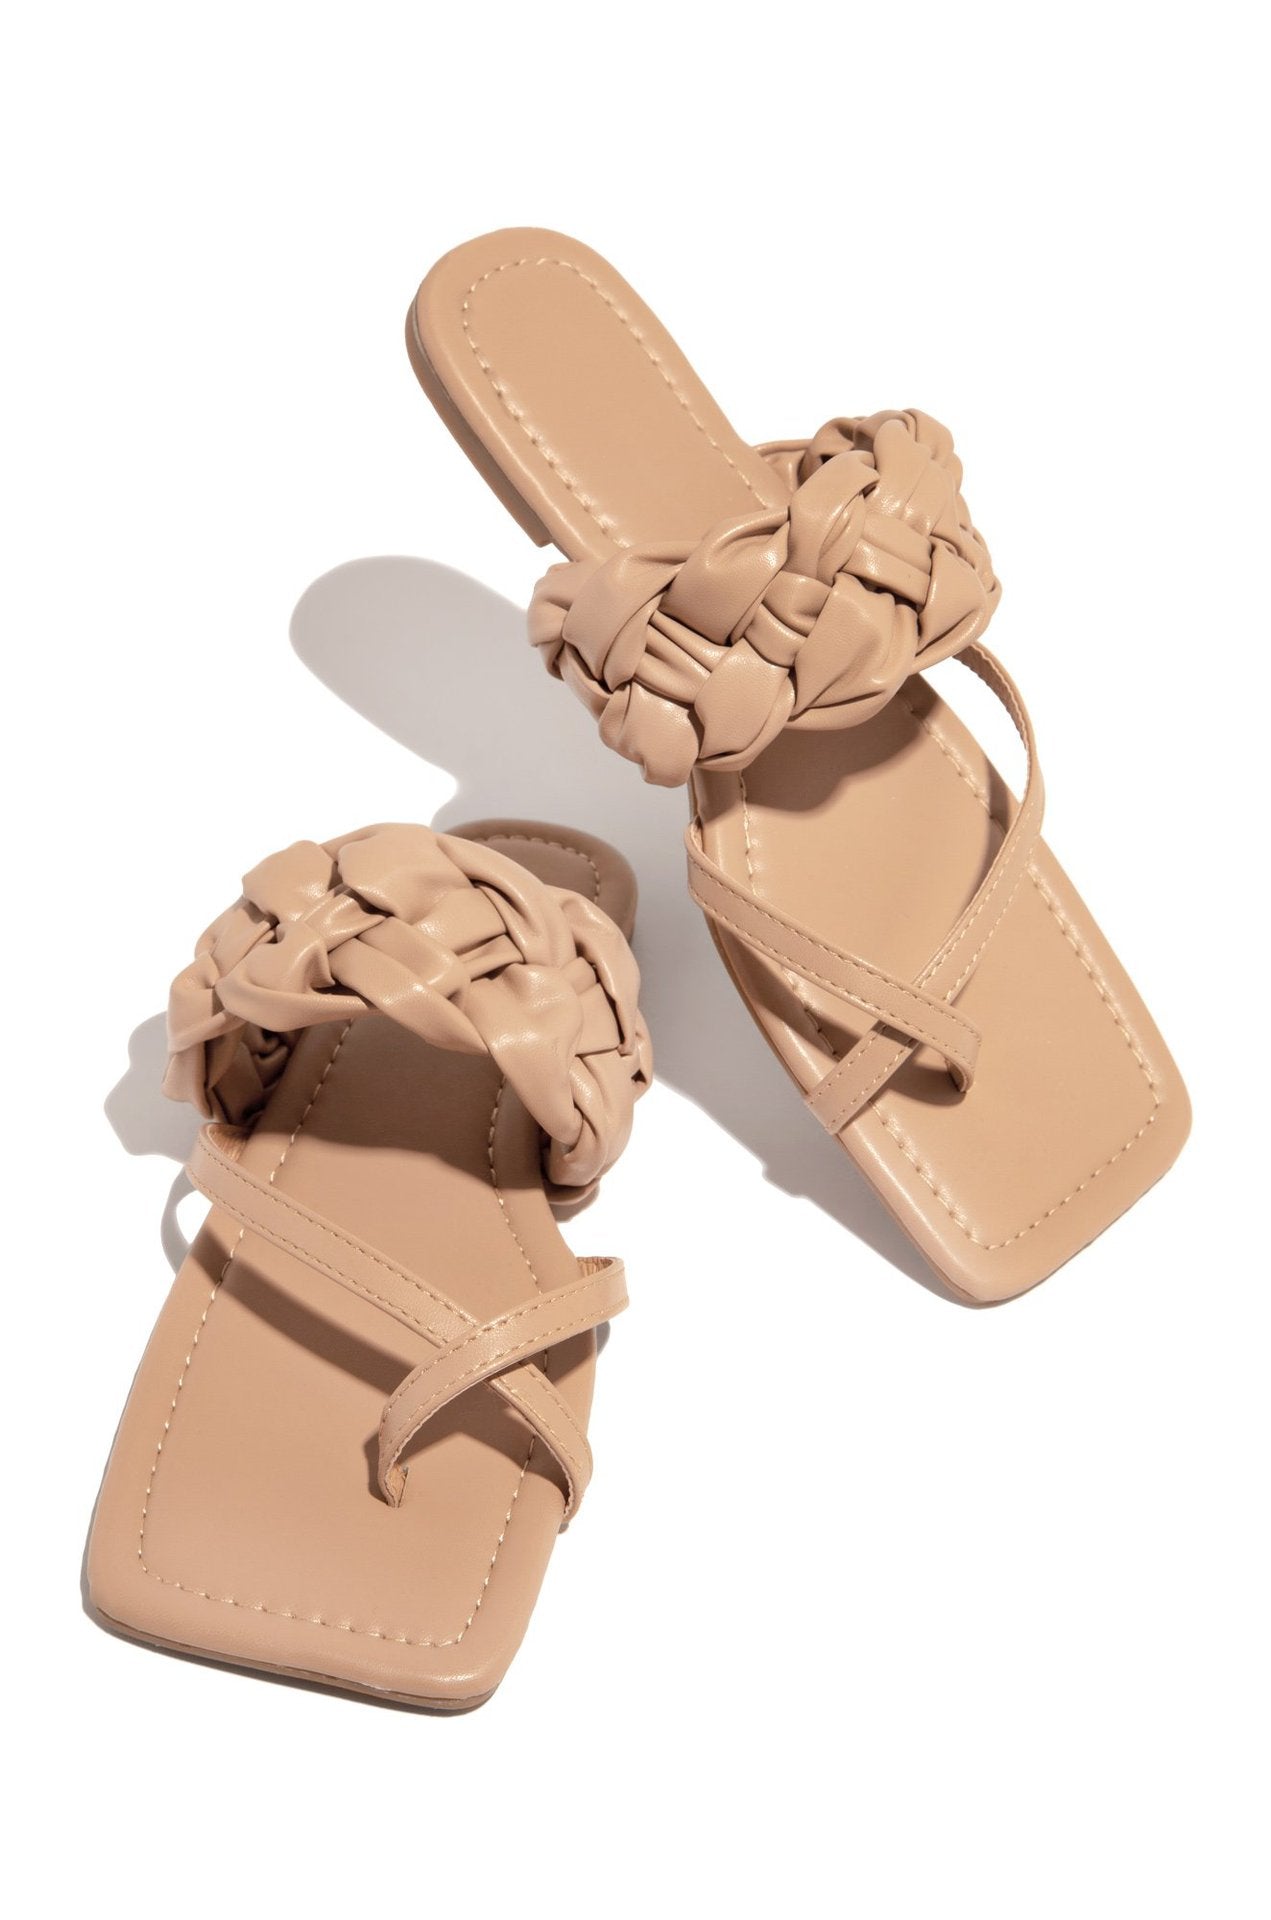 Spring Summer Sandals | Braided Cross Toe Flat Sandal